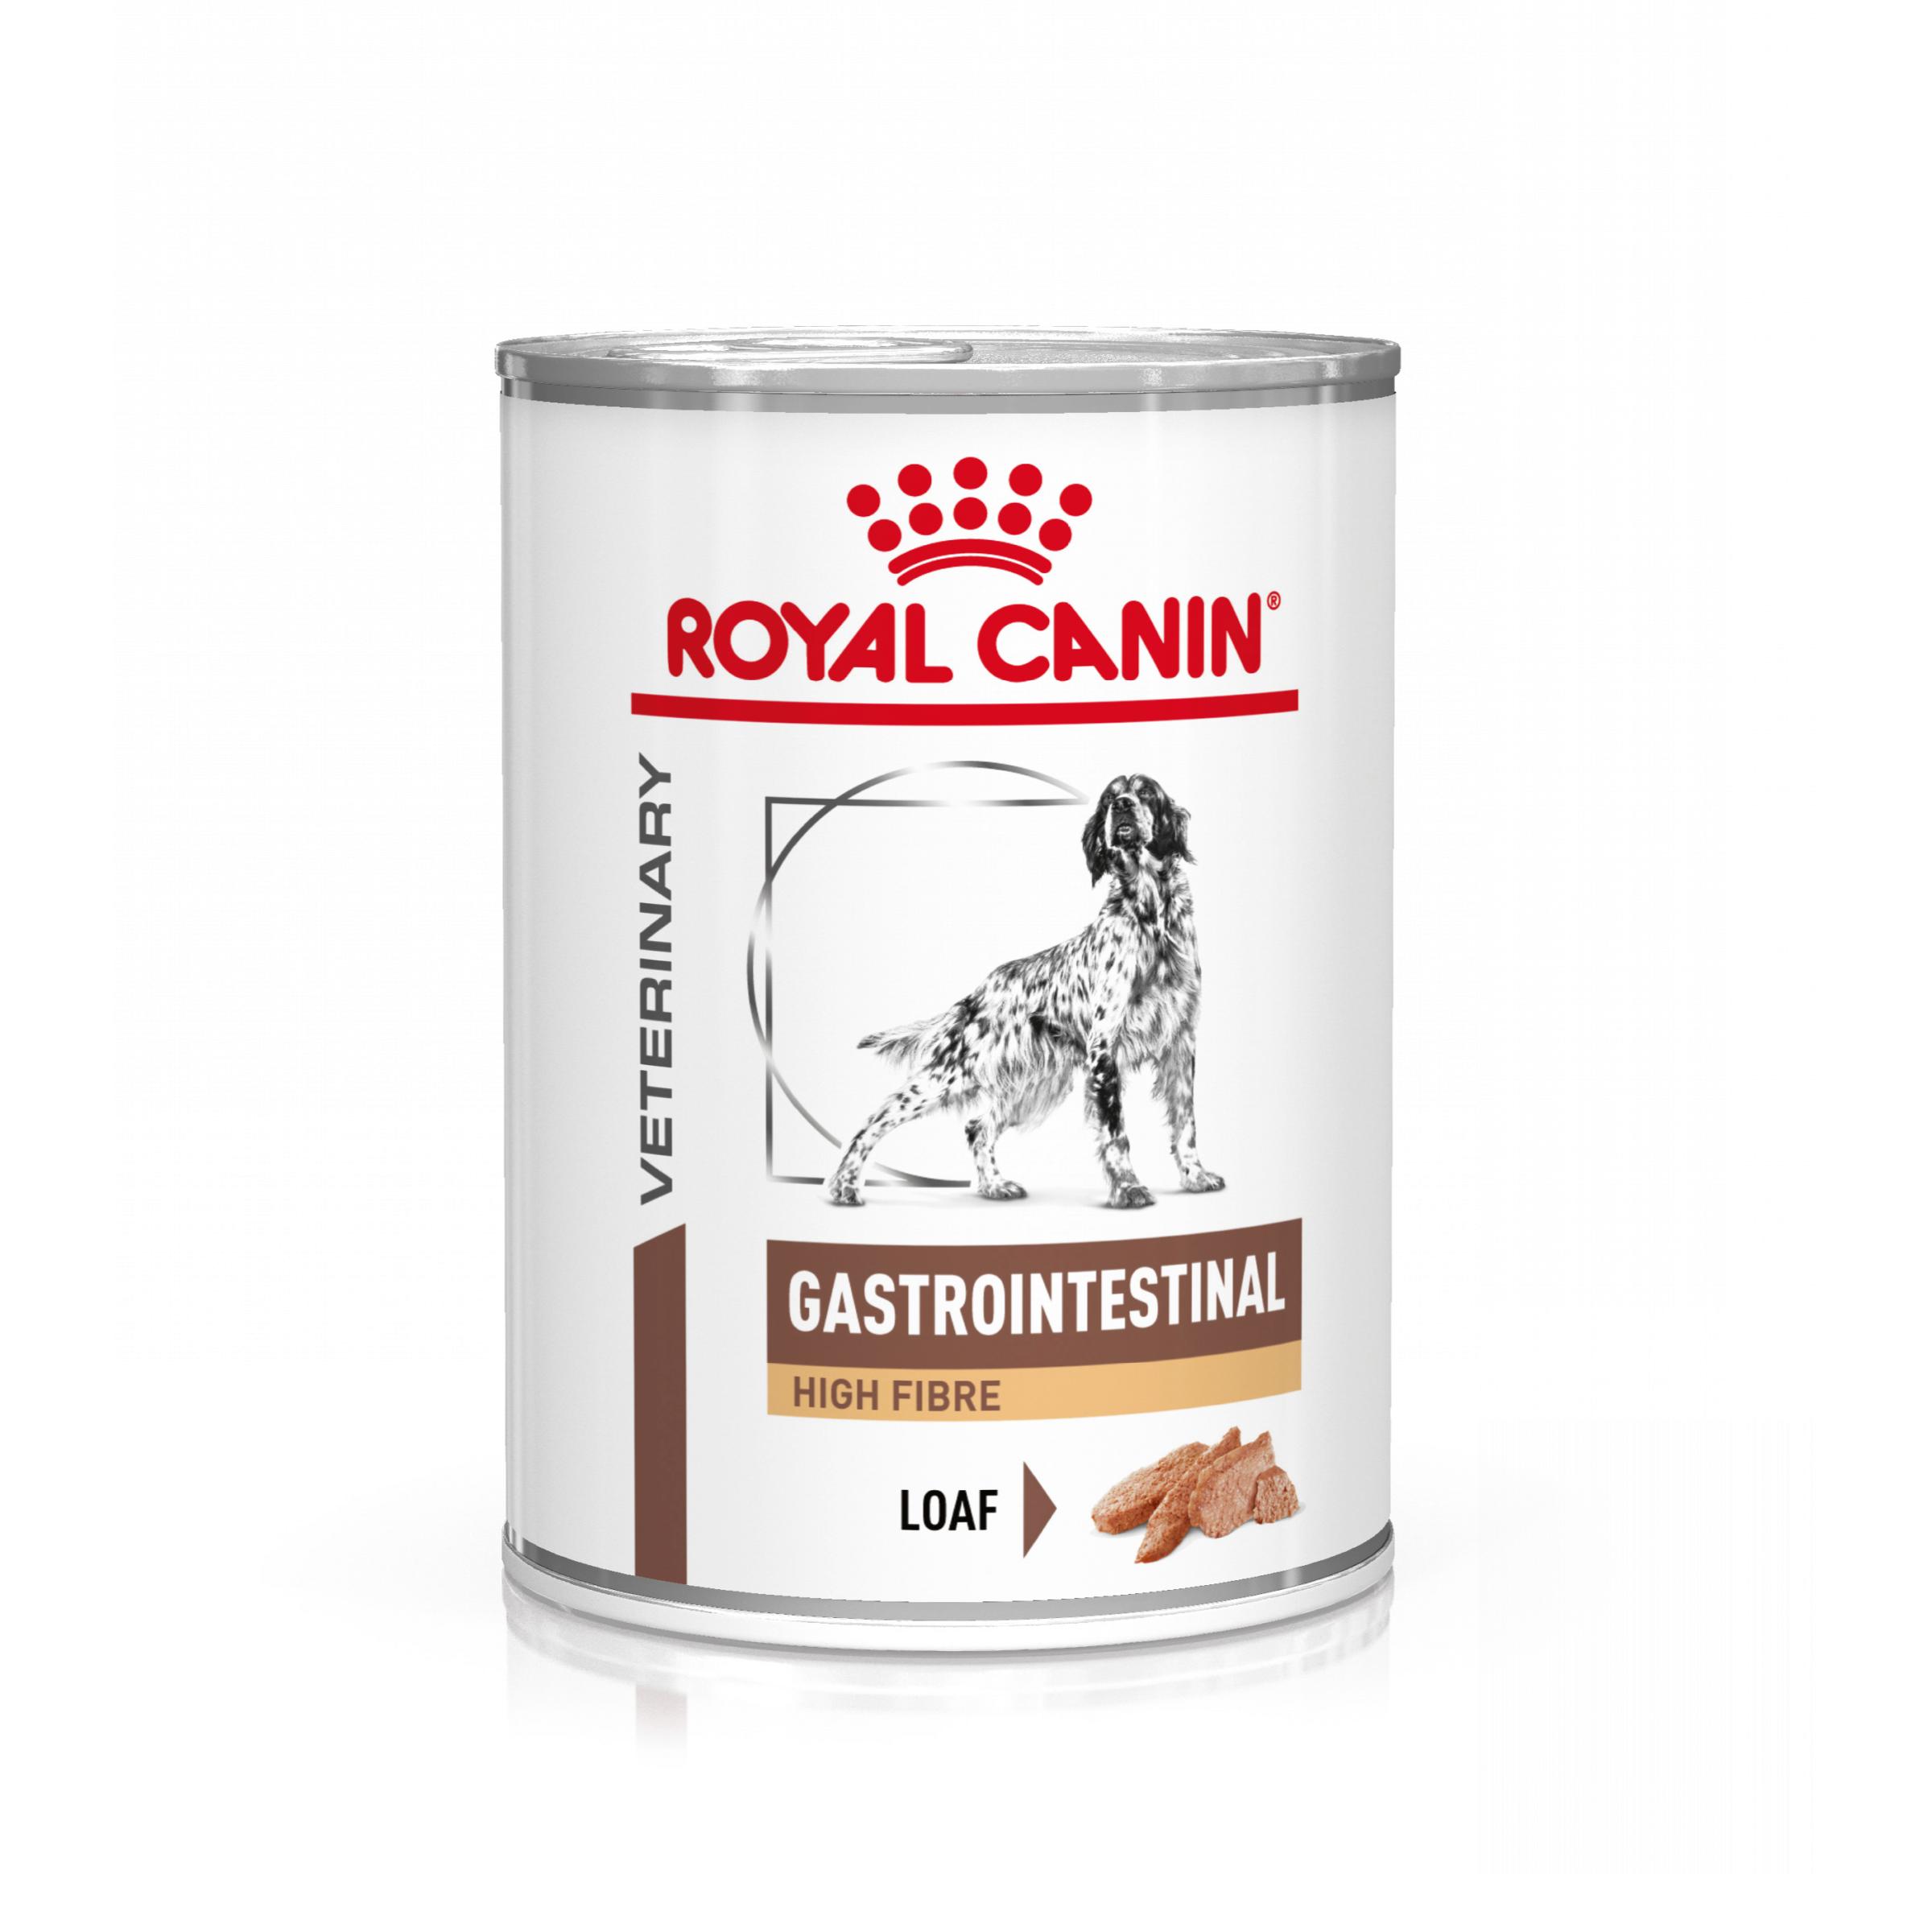 Royal Canin Gastrointestinal High Fibre Hond - blik